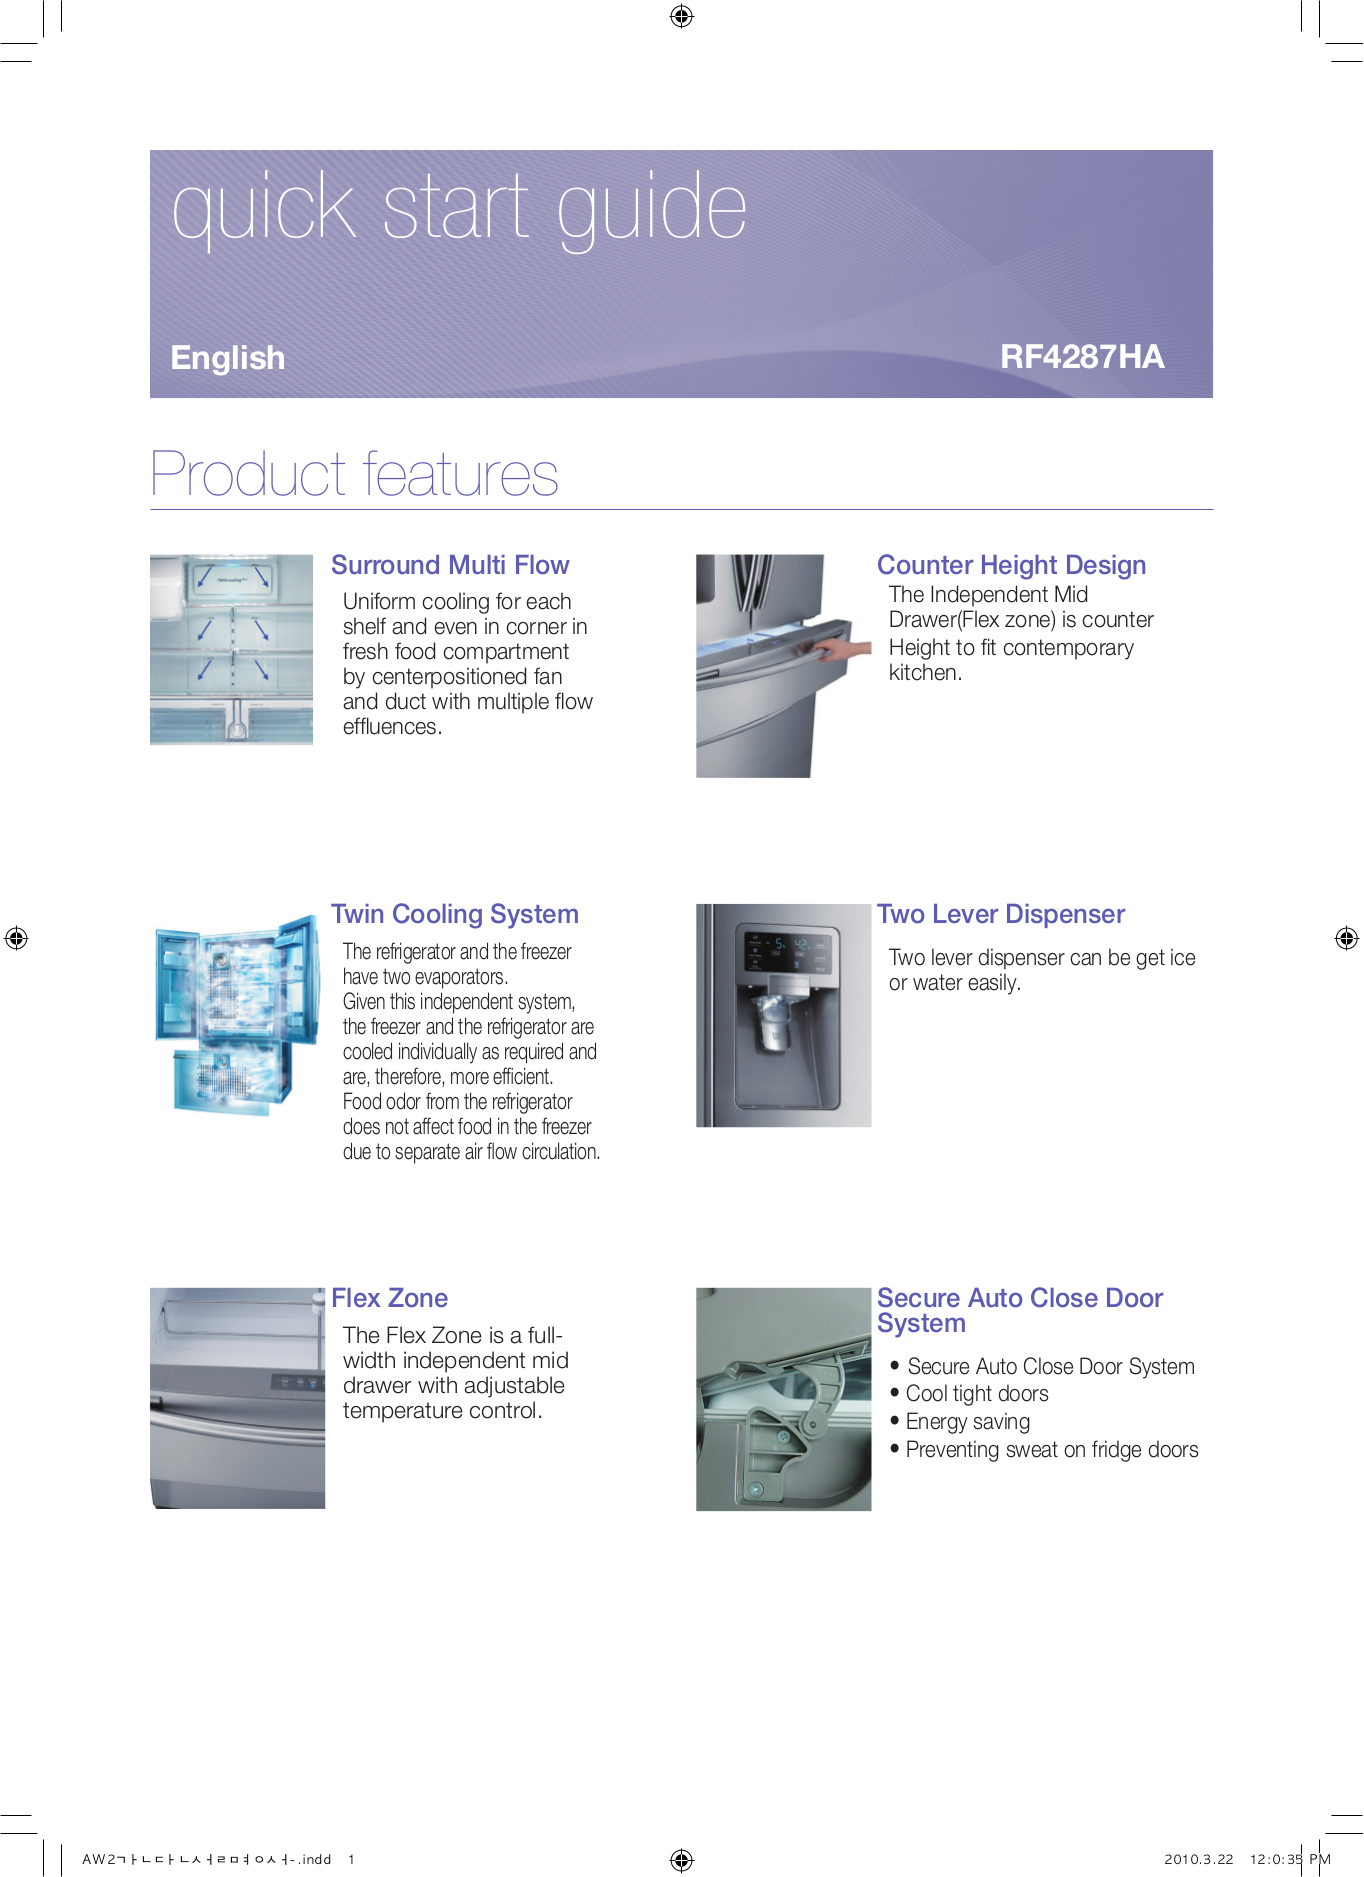 Download free pdf for Samsung RF4287HA Refrigerator manual